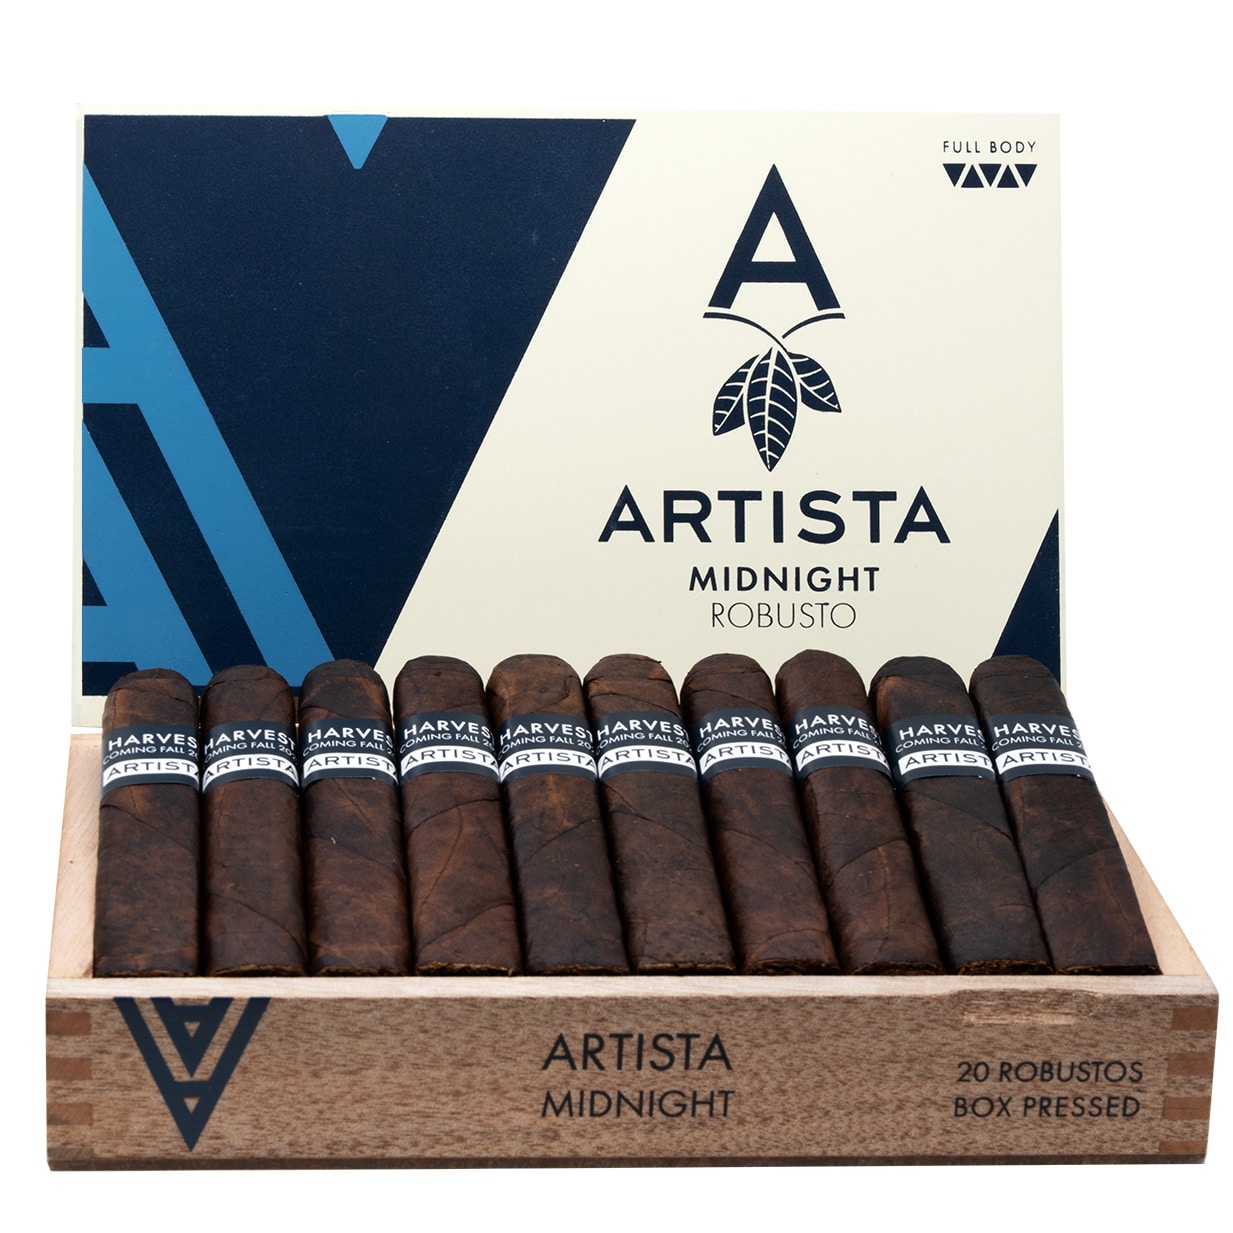 El Artista Rebrands to Artista, Announces New Lines for PCA - Cigar News